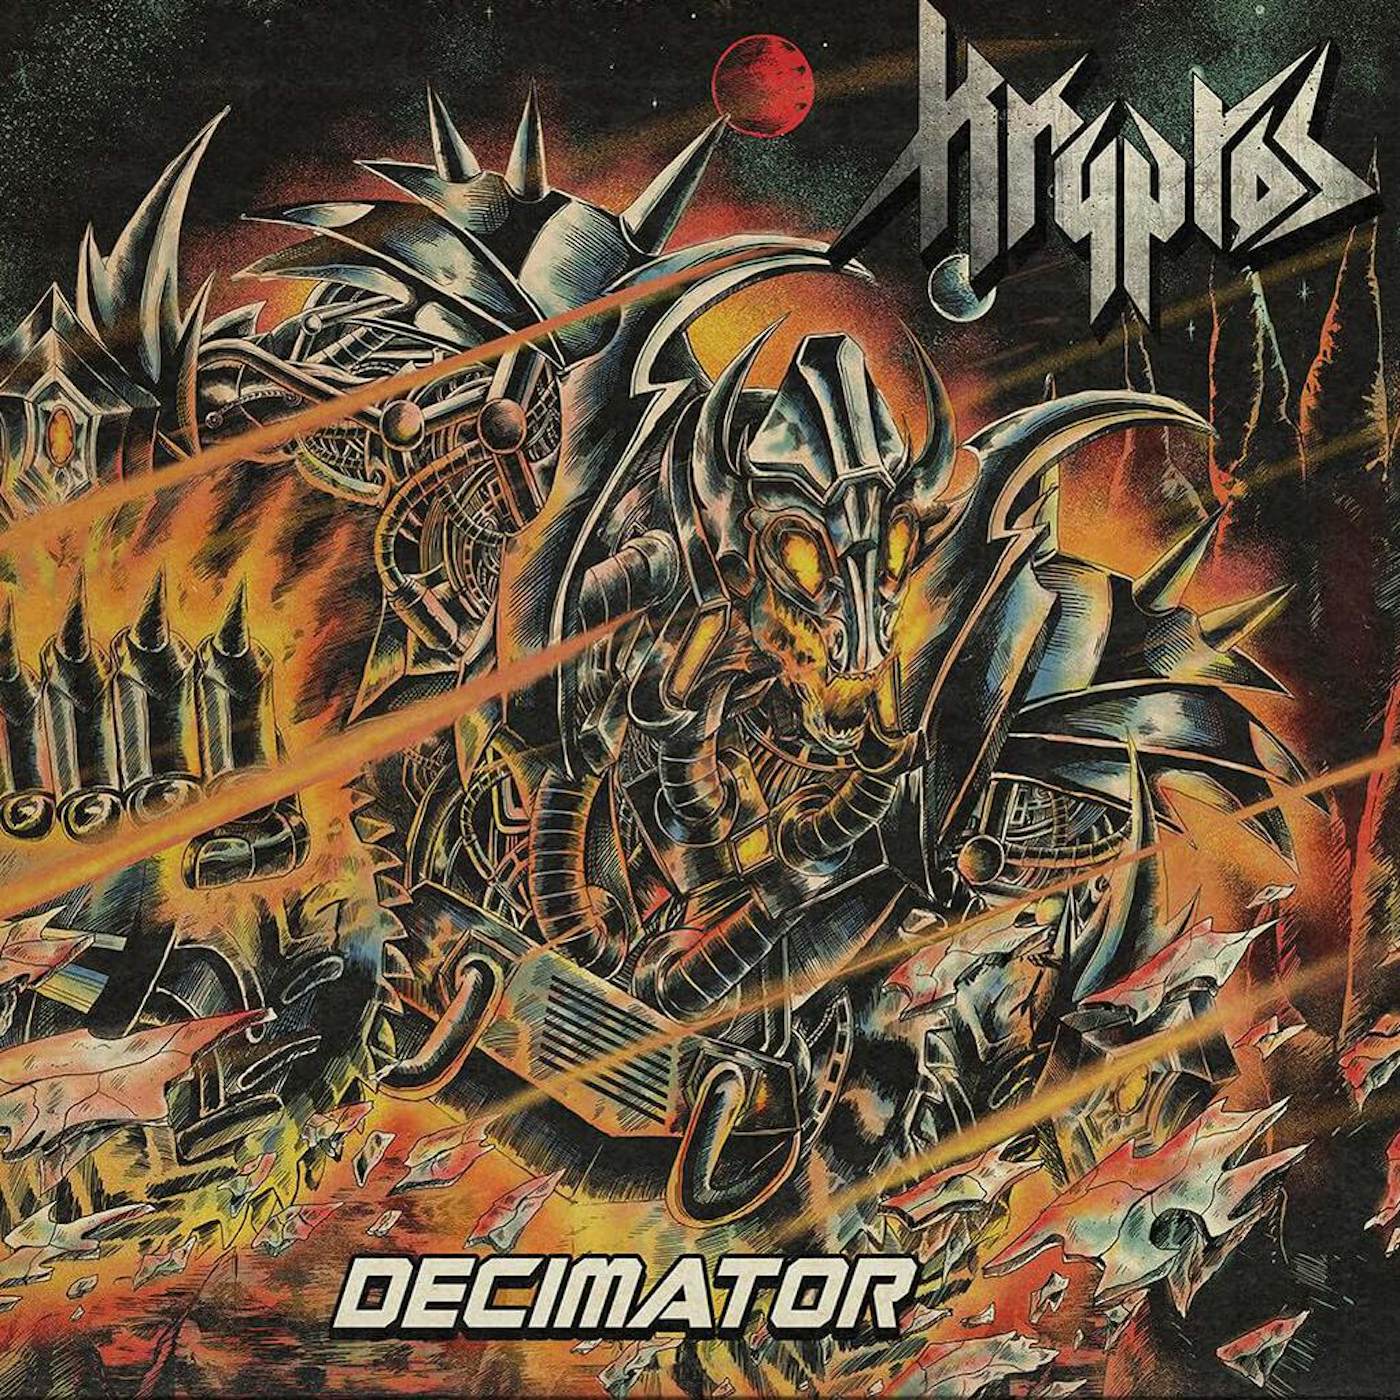 Kryptos Decimator - Gatefold Sleeve, Limited Edition Vinyl Record